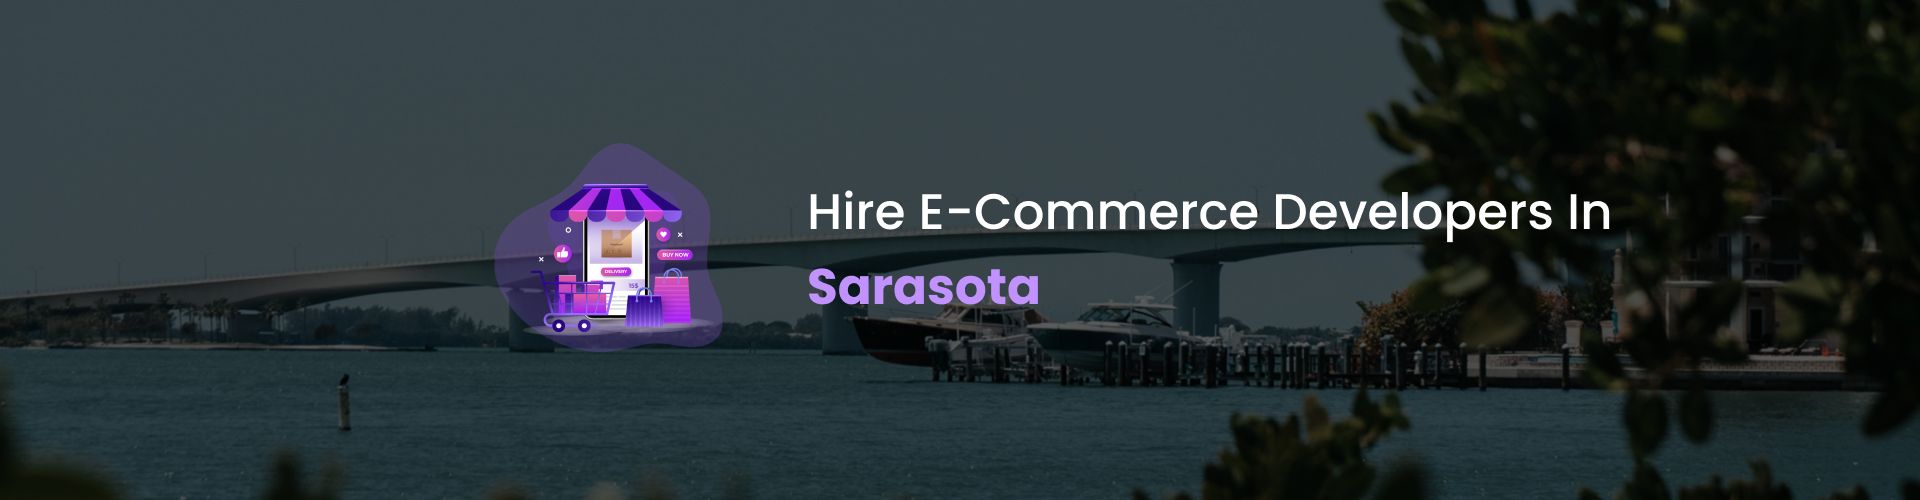 hire ecommerce developers in sarasota